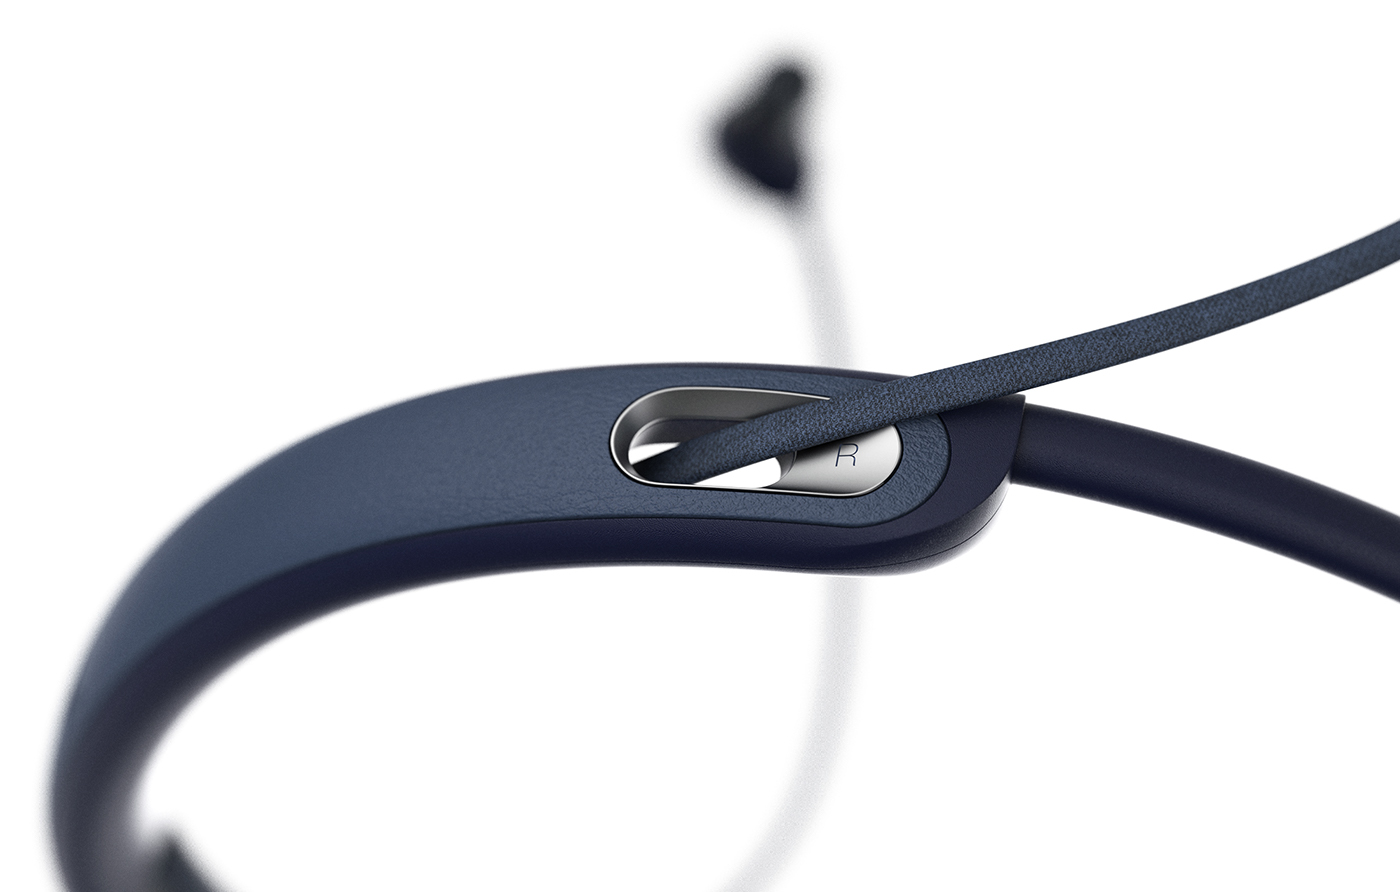 headphone neckband earphone Samsung earbud Electronics music speaker industrialdesign productdesign